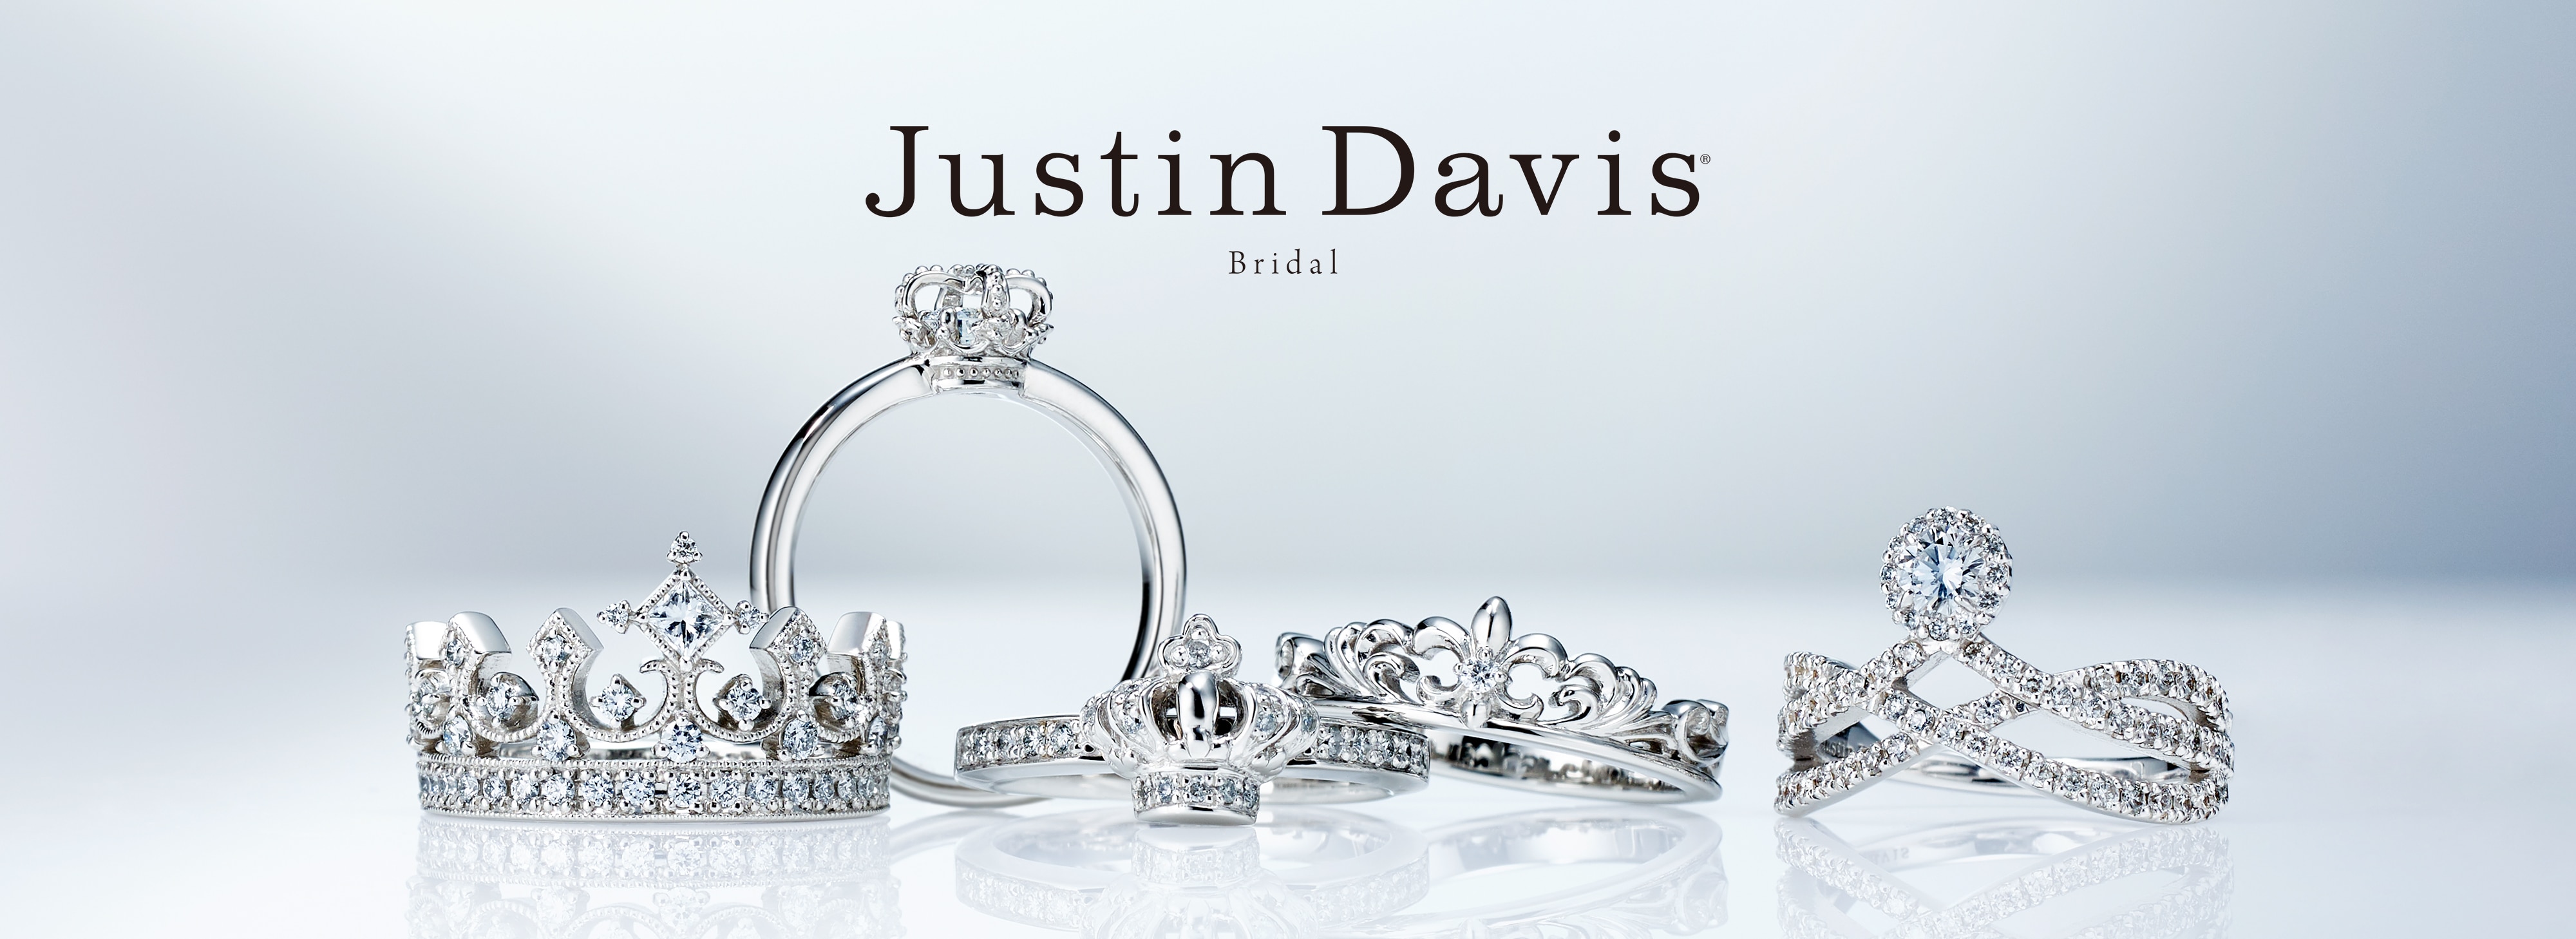 Justin Davis Bridal